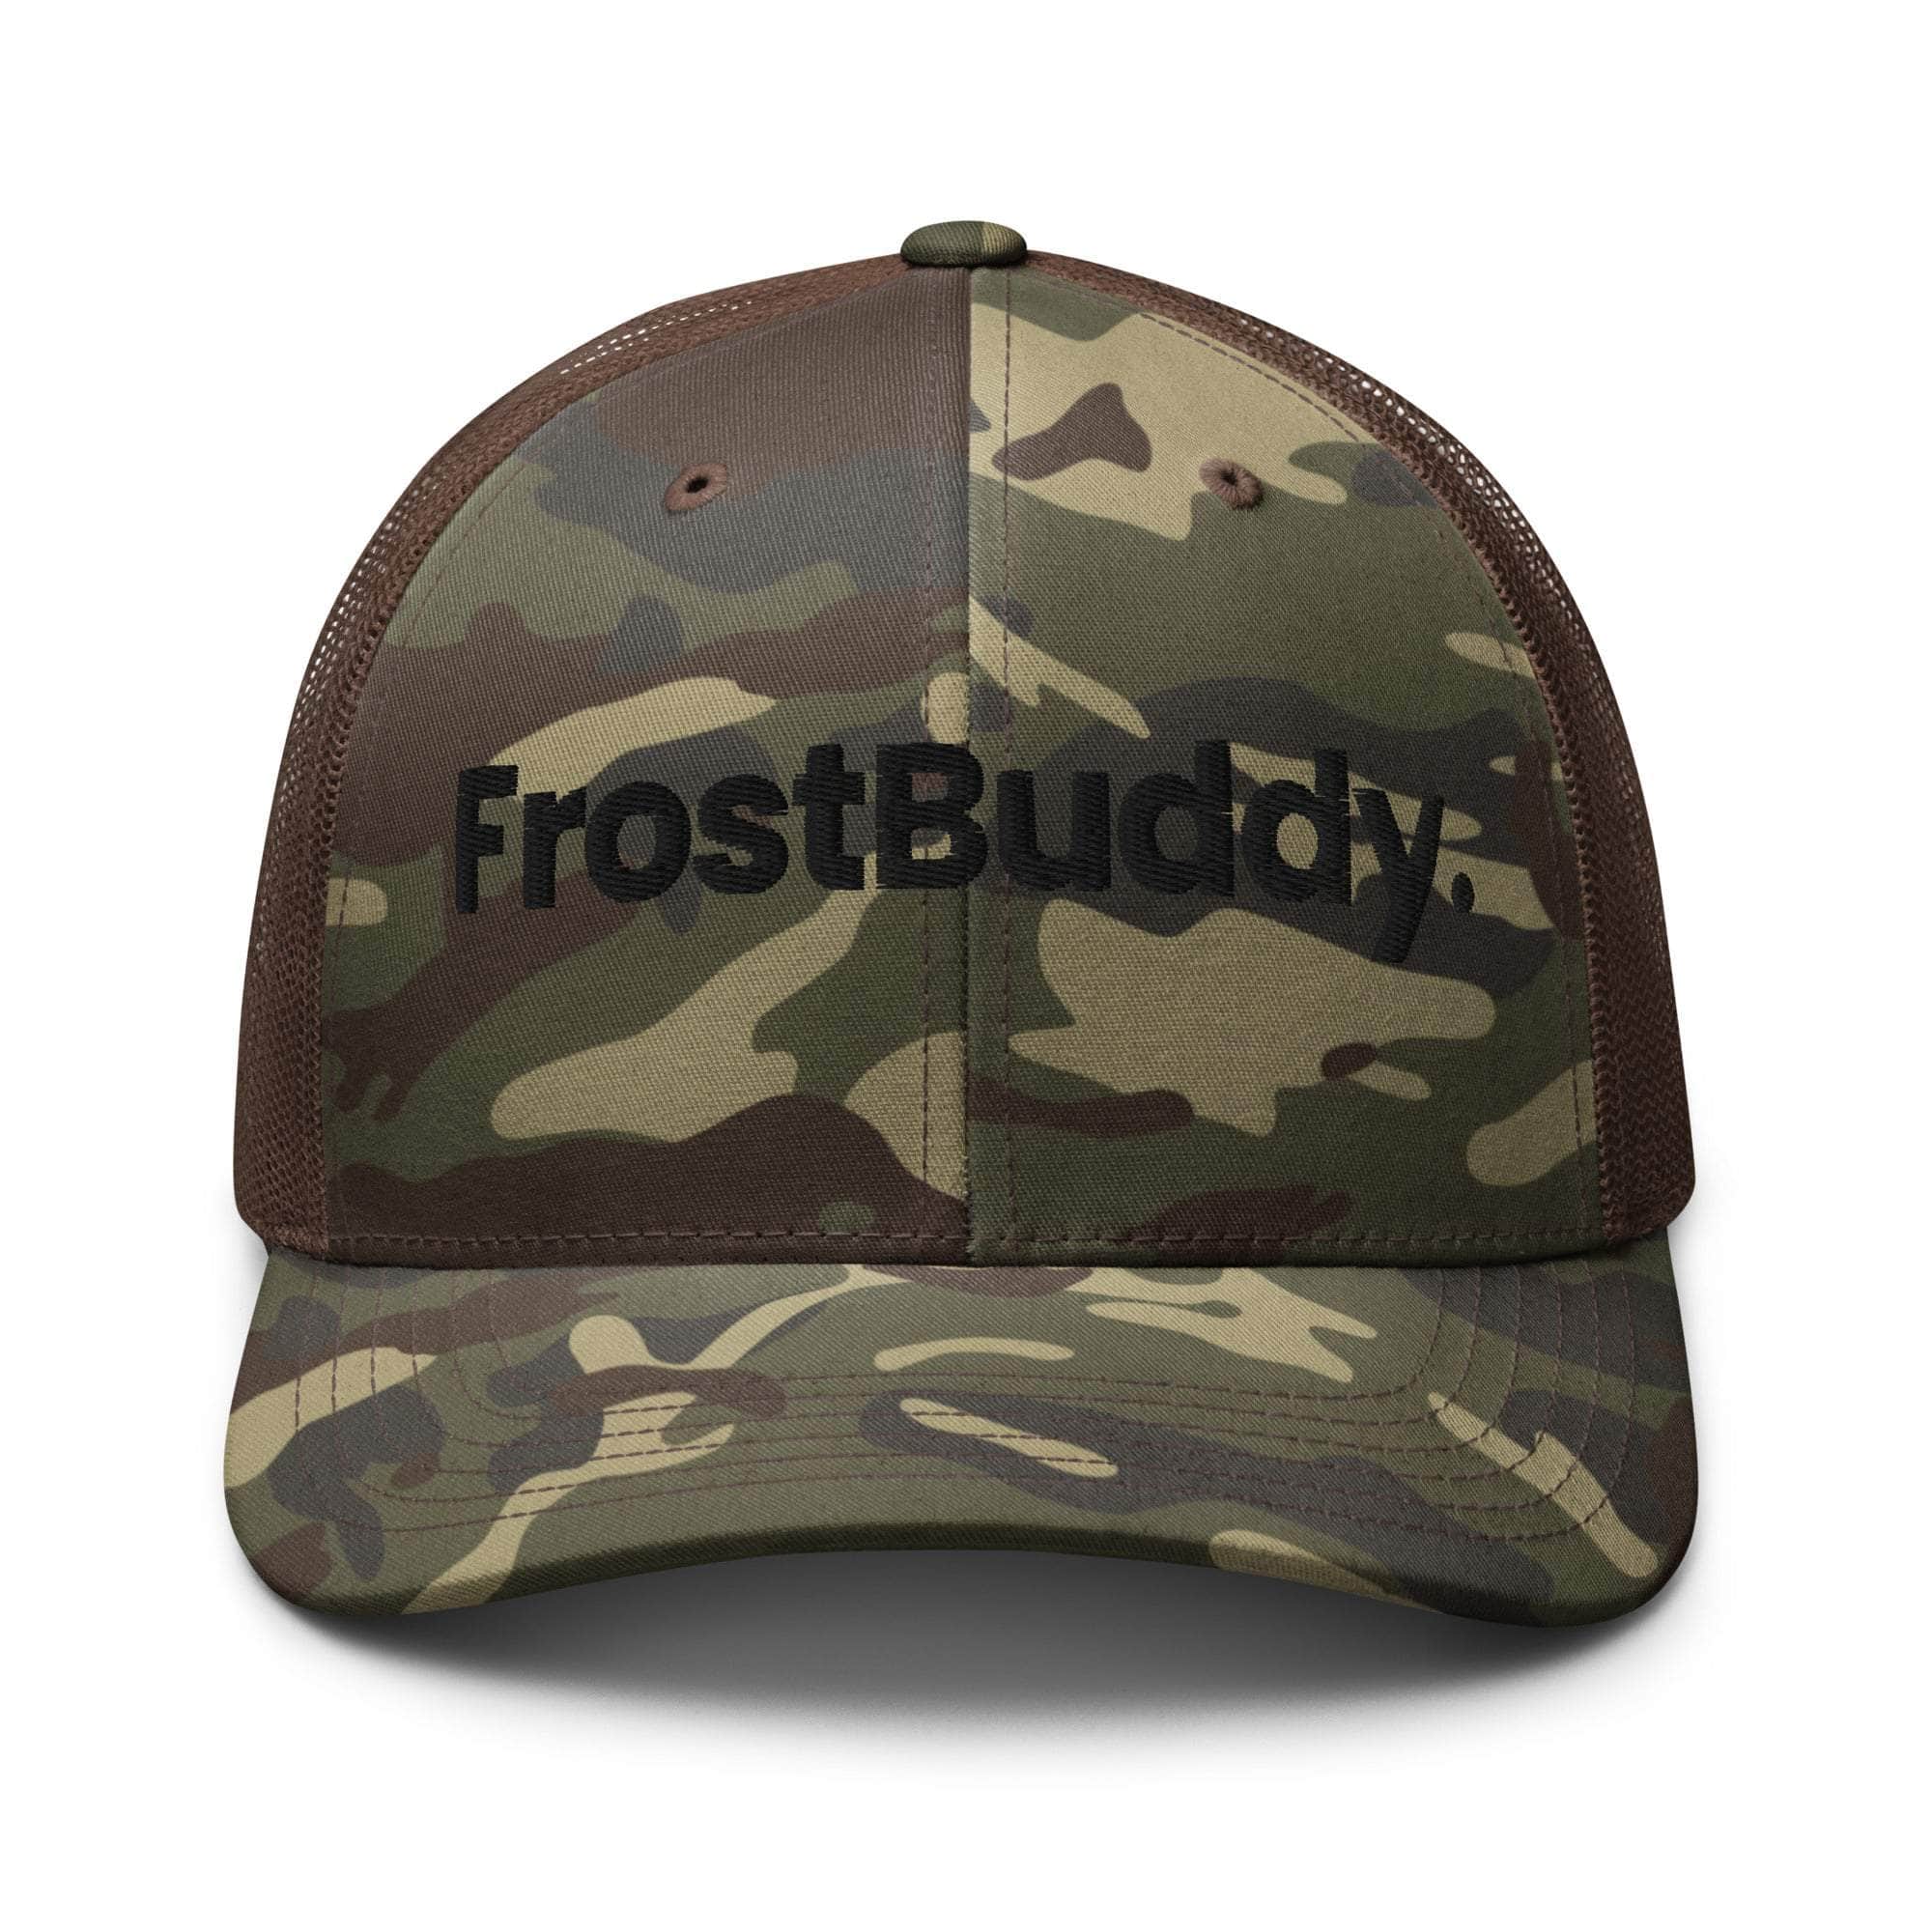 Frost Buddy  Camo/Brown Logo Camouflage Trucker Hat